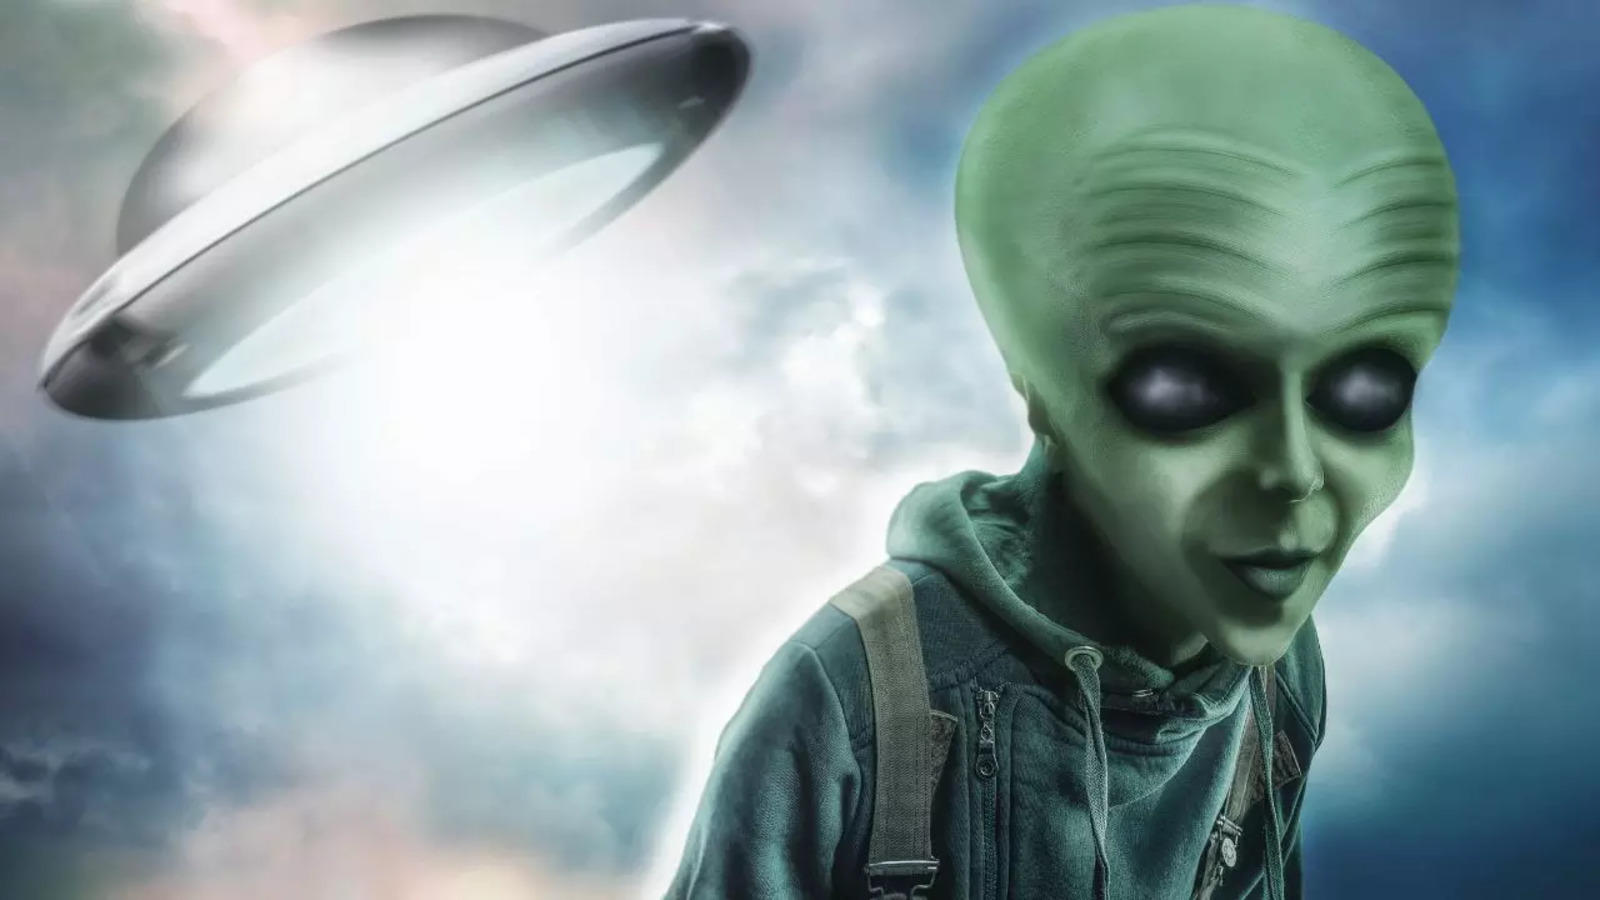 NASA announces UFO study group members